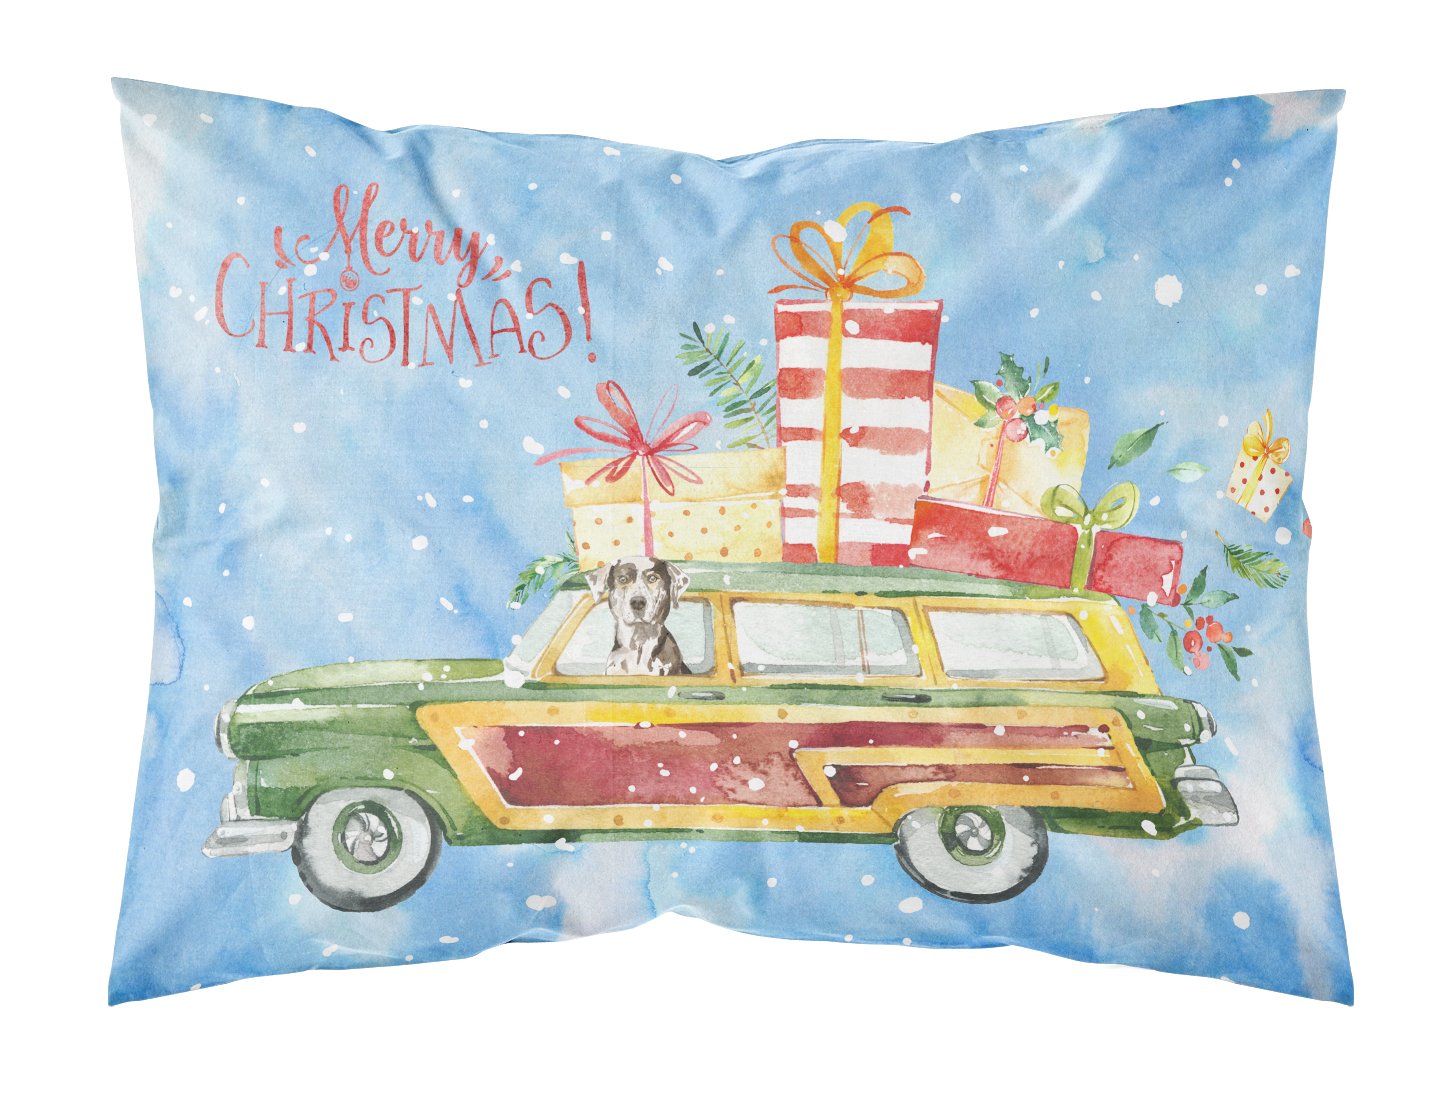 Merry Christmas Catahoula Leopard Dog Fabric Standard Pillowcase CK2402PILLOWCASE by Caroline's Treasures